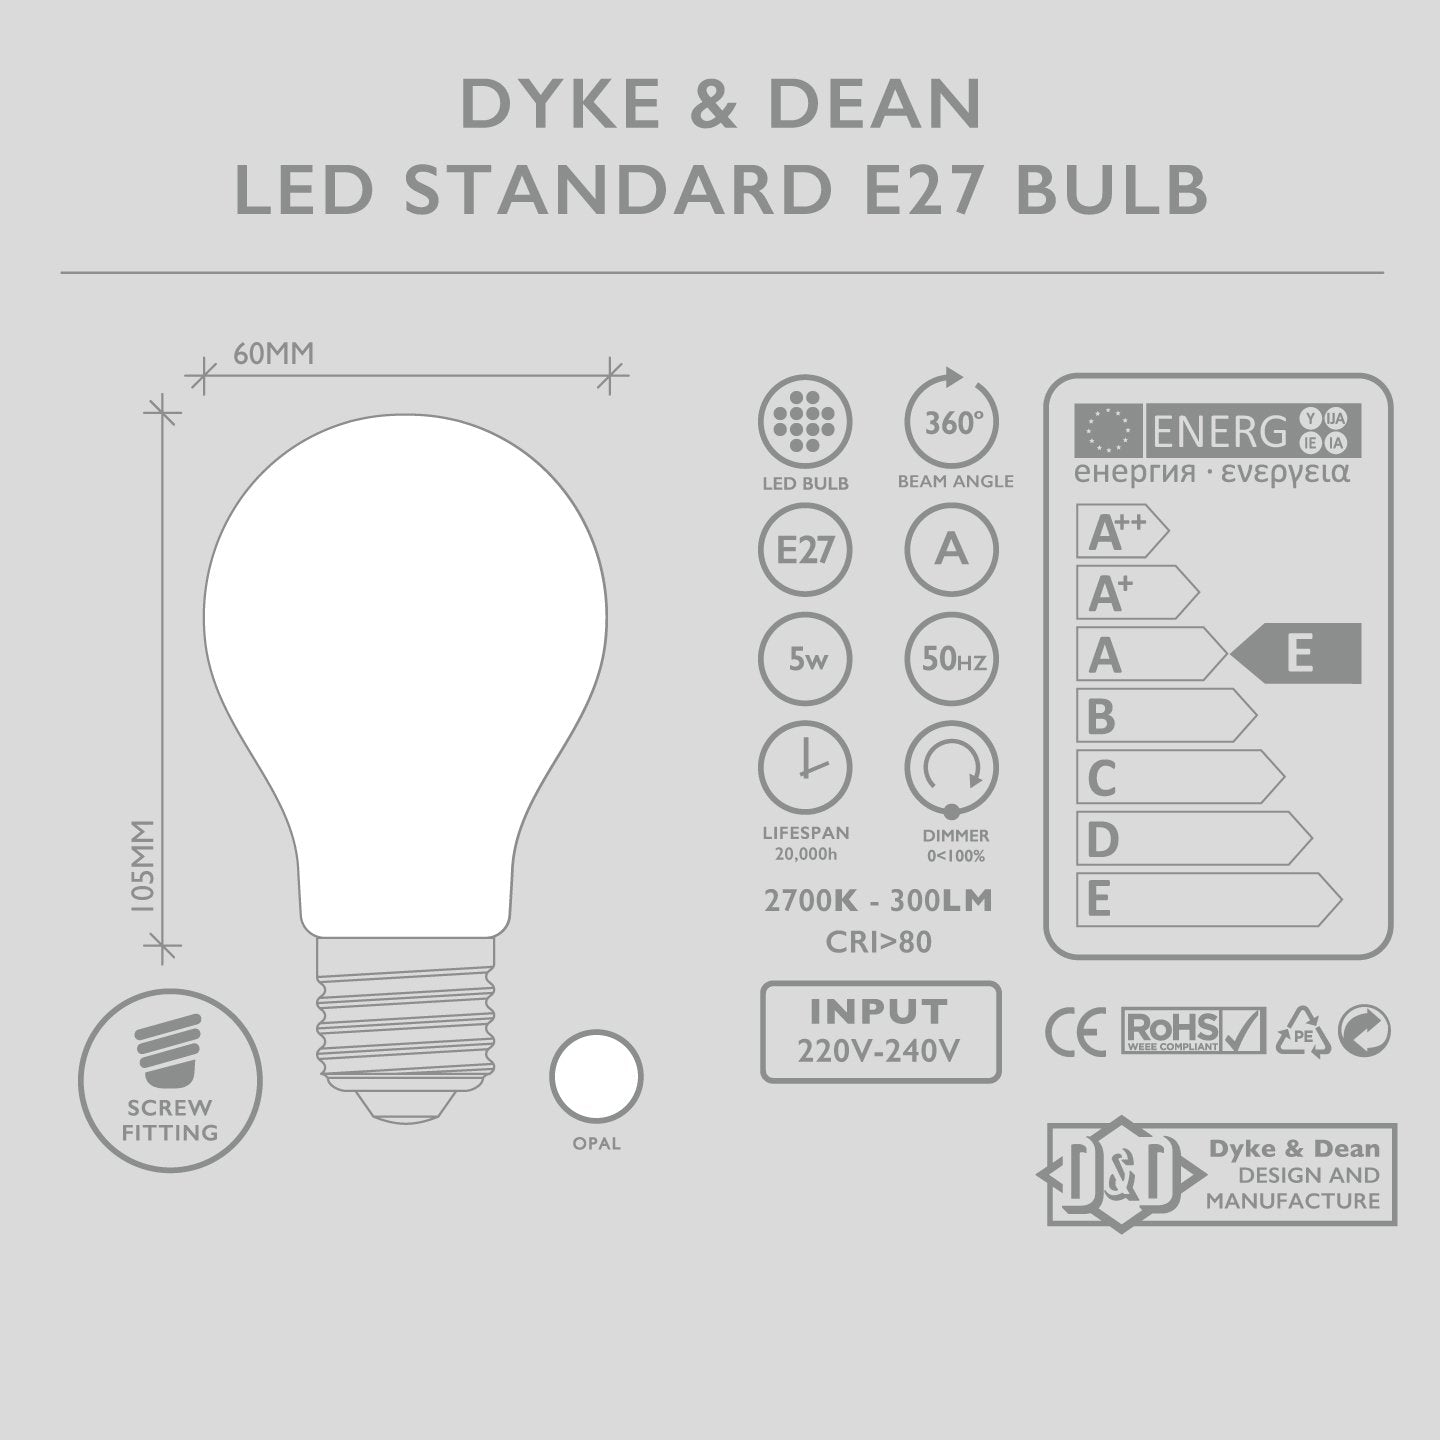 DYKE & DEAN LED STANDARD OPAL E27 BULB - DYKE & DEAN